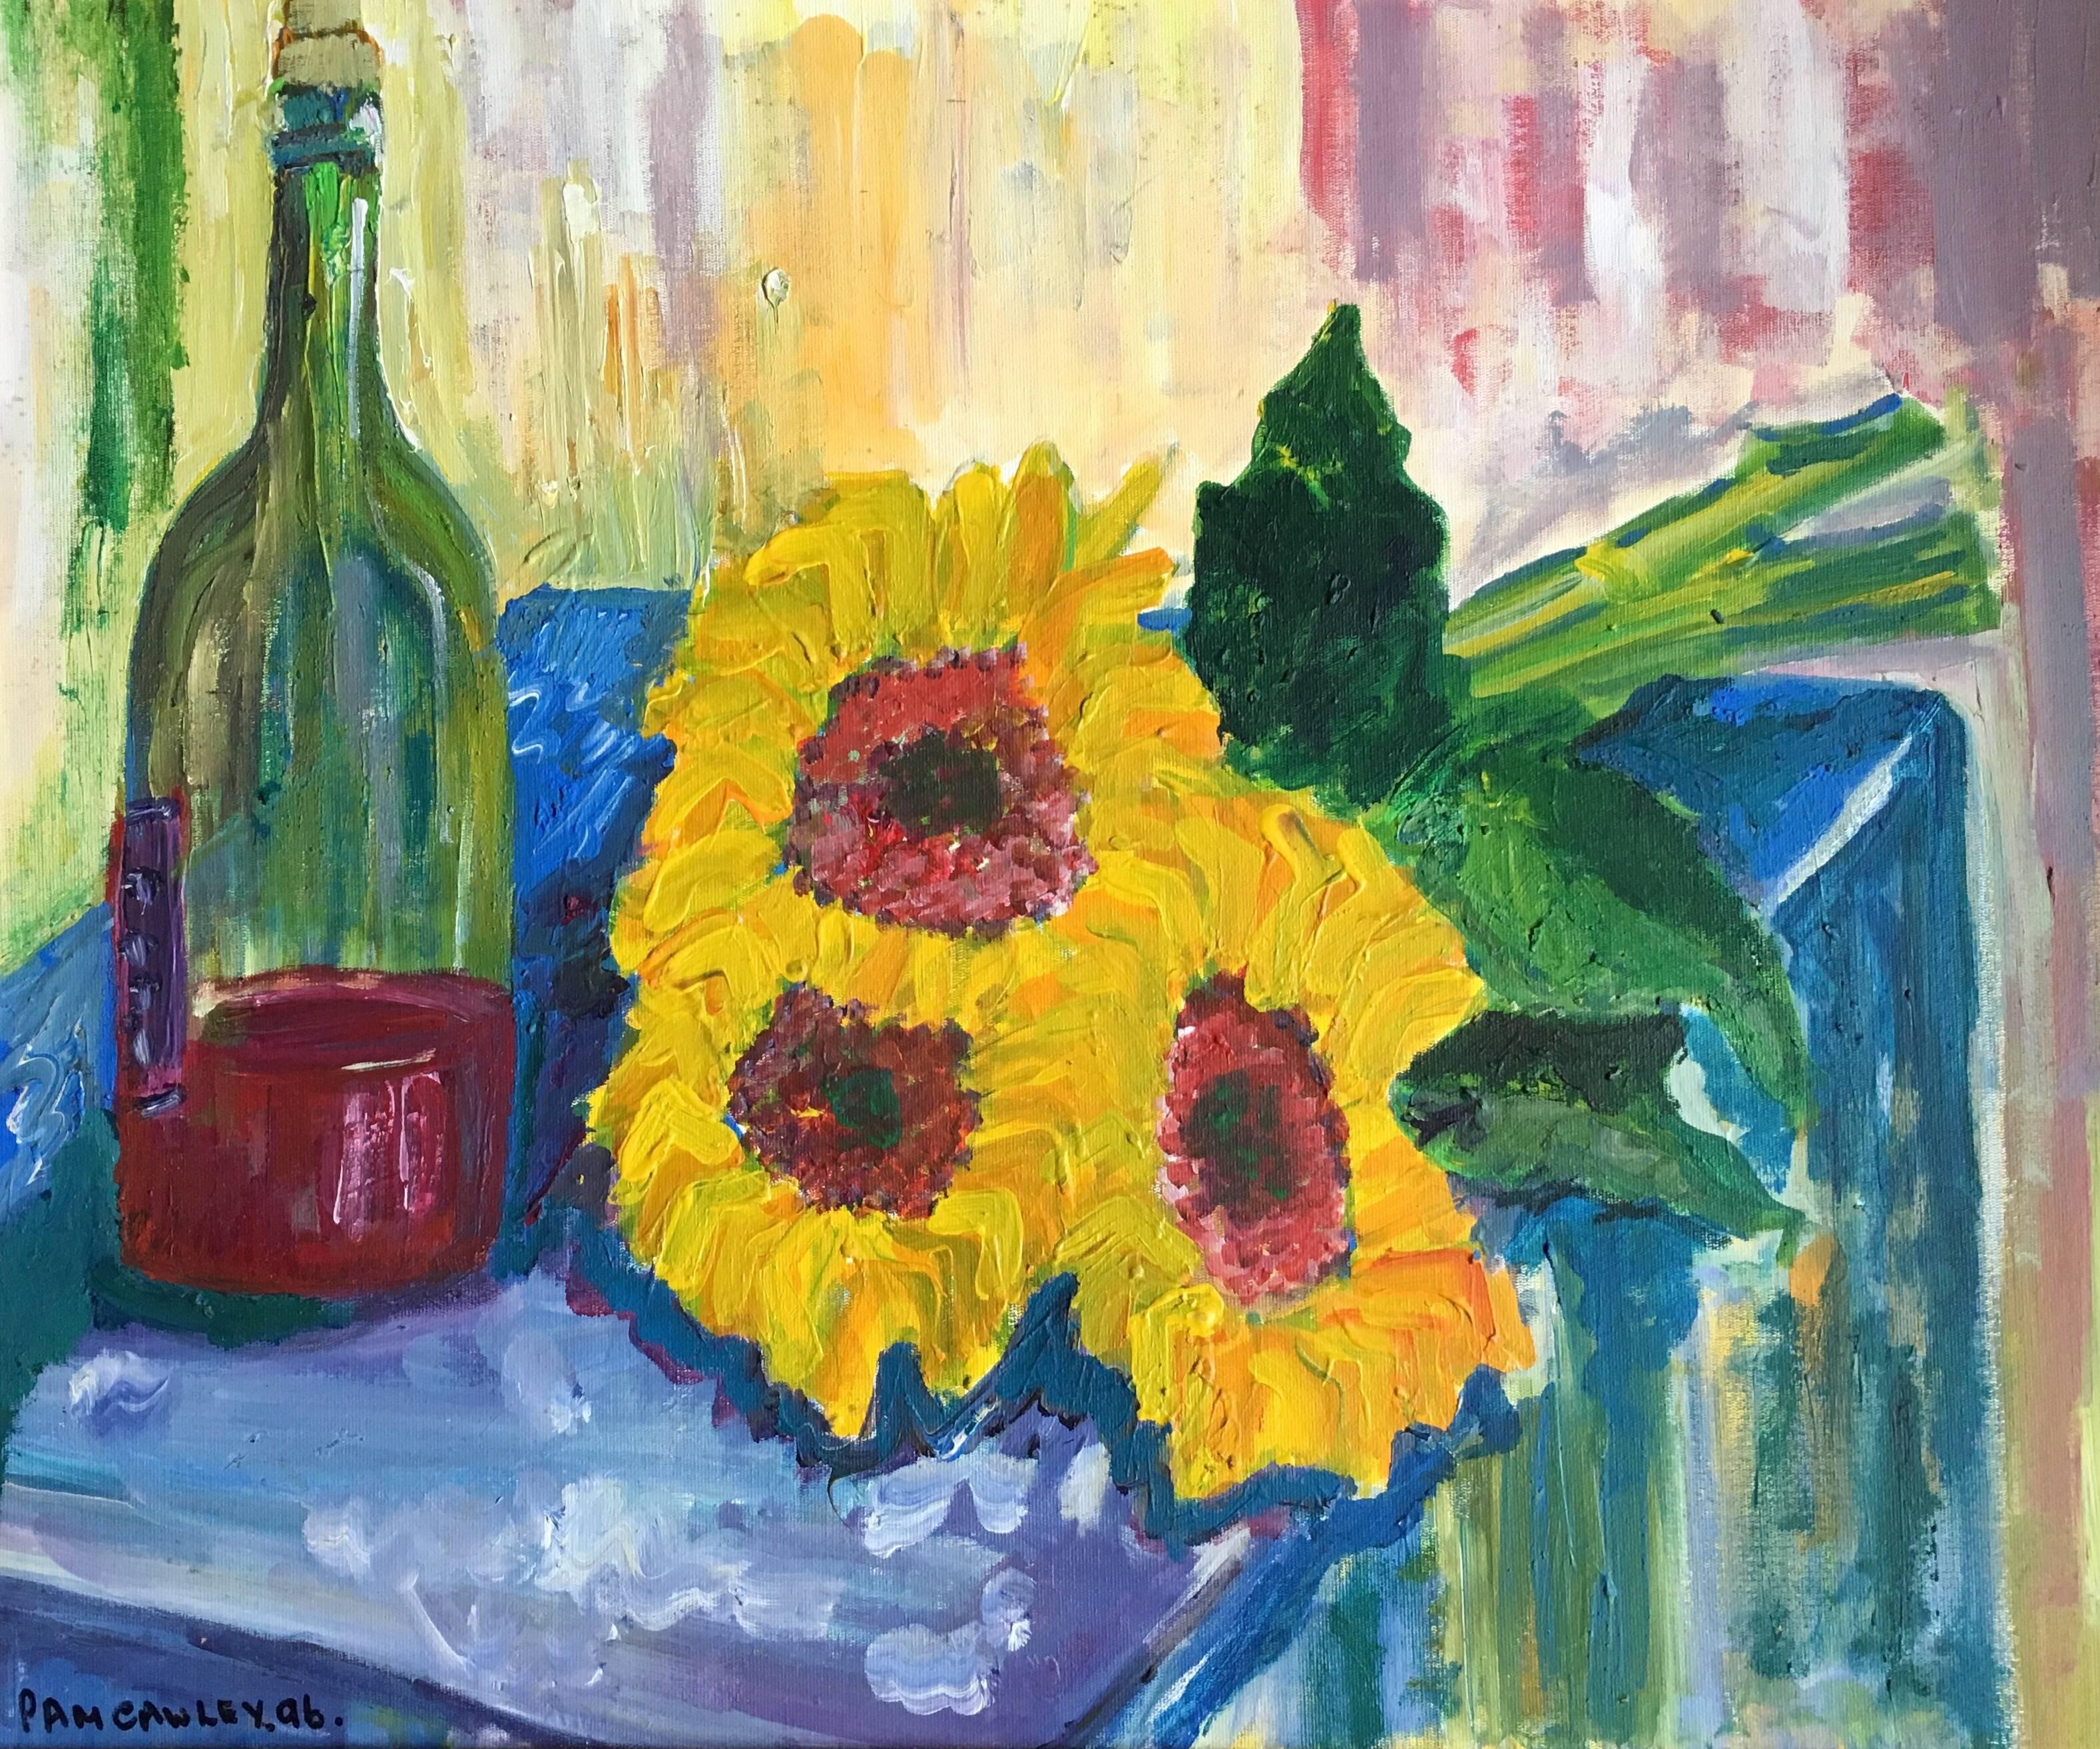 Pamela Cawley Figurative Painting - Sunflowers and Red Wine, Still Life, British Artist